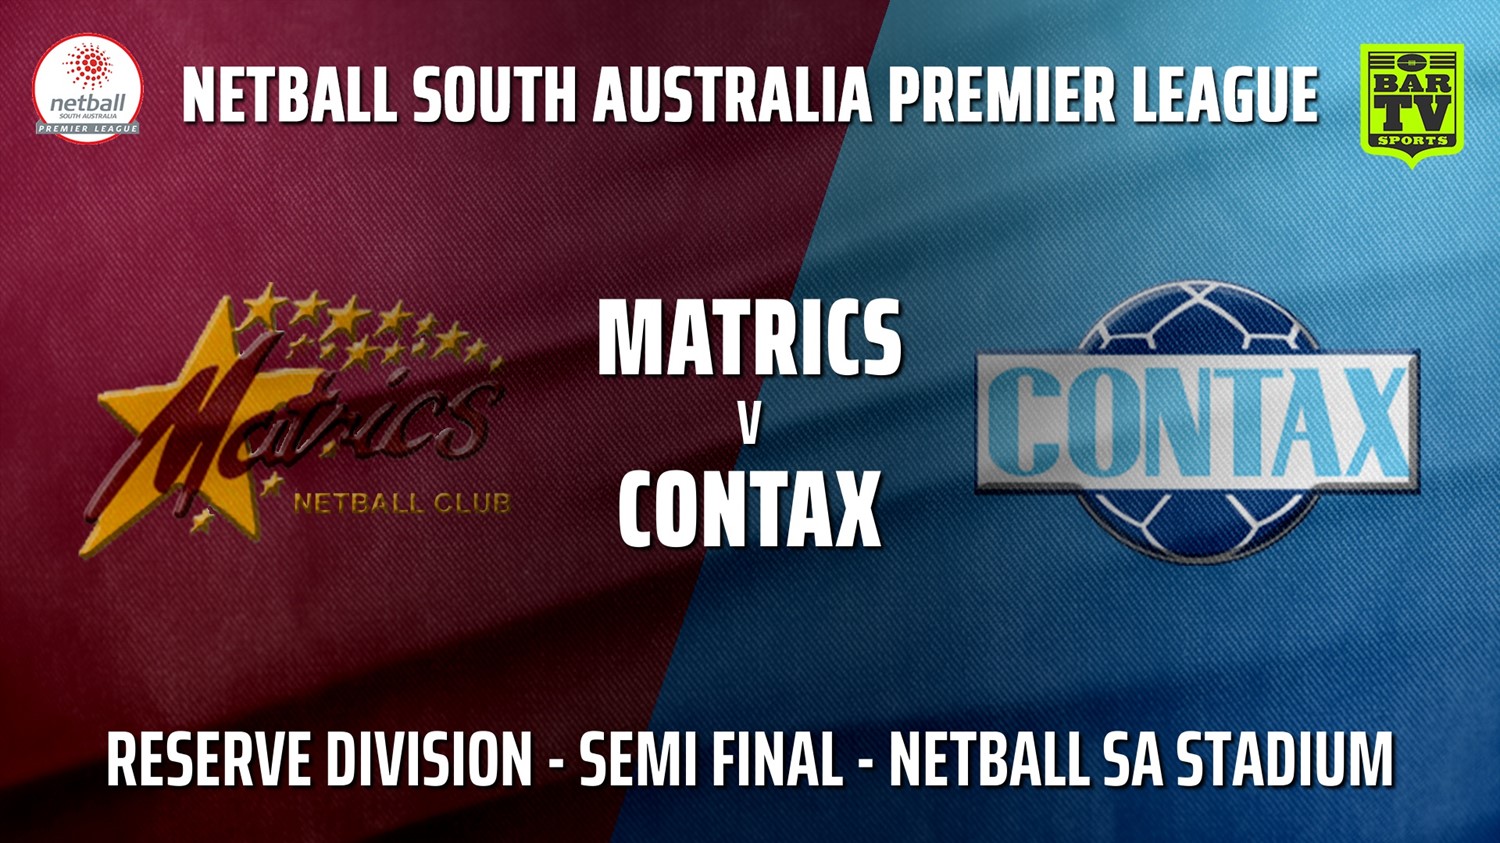 210820-SA Premier League Semi Final - Reserve Division - Matrics v Contax Slate Image